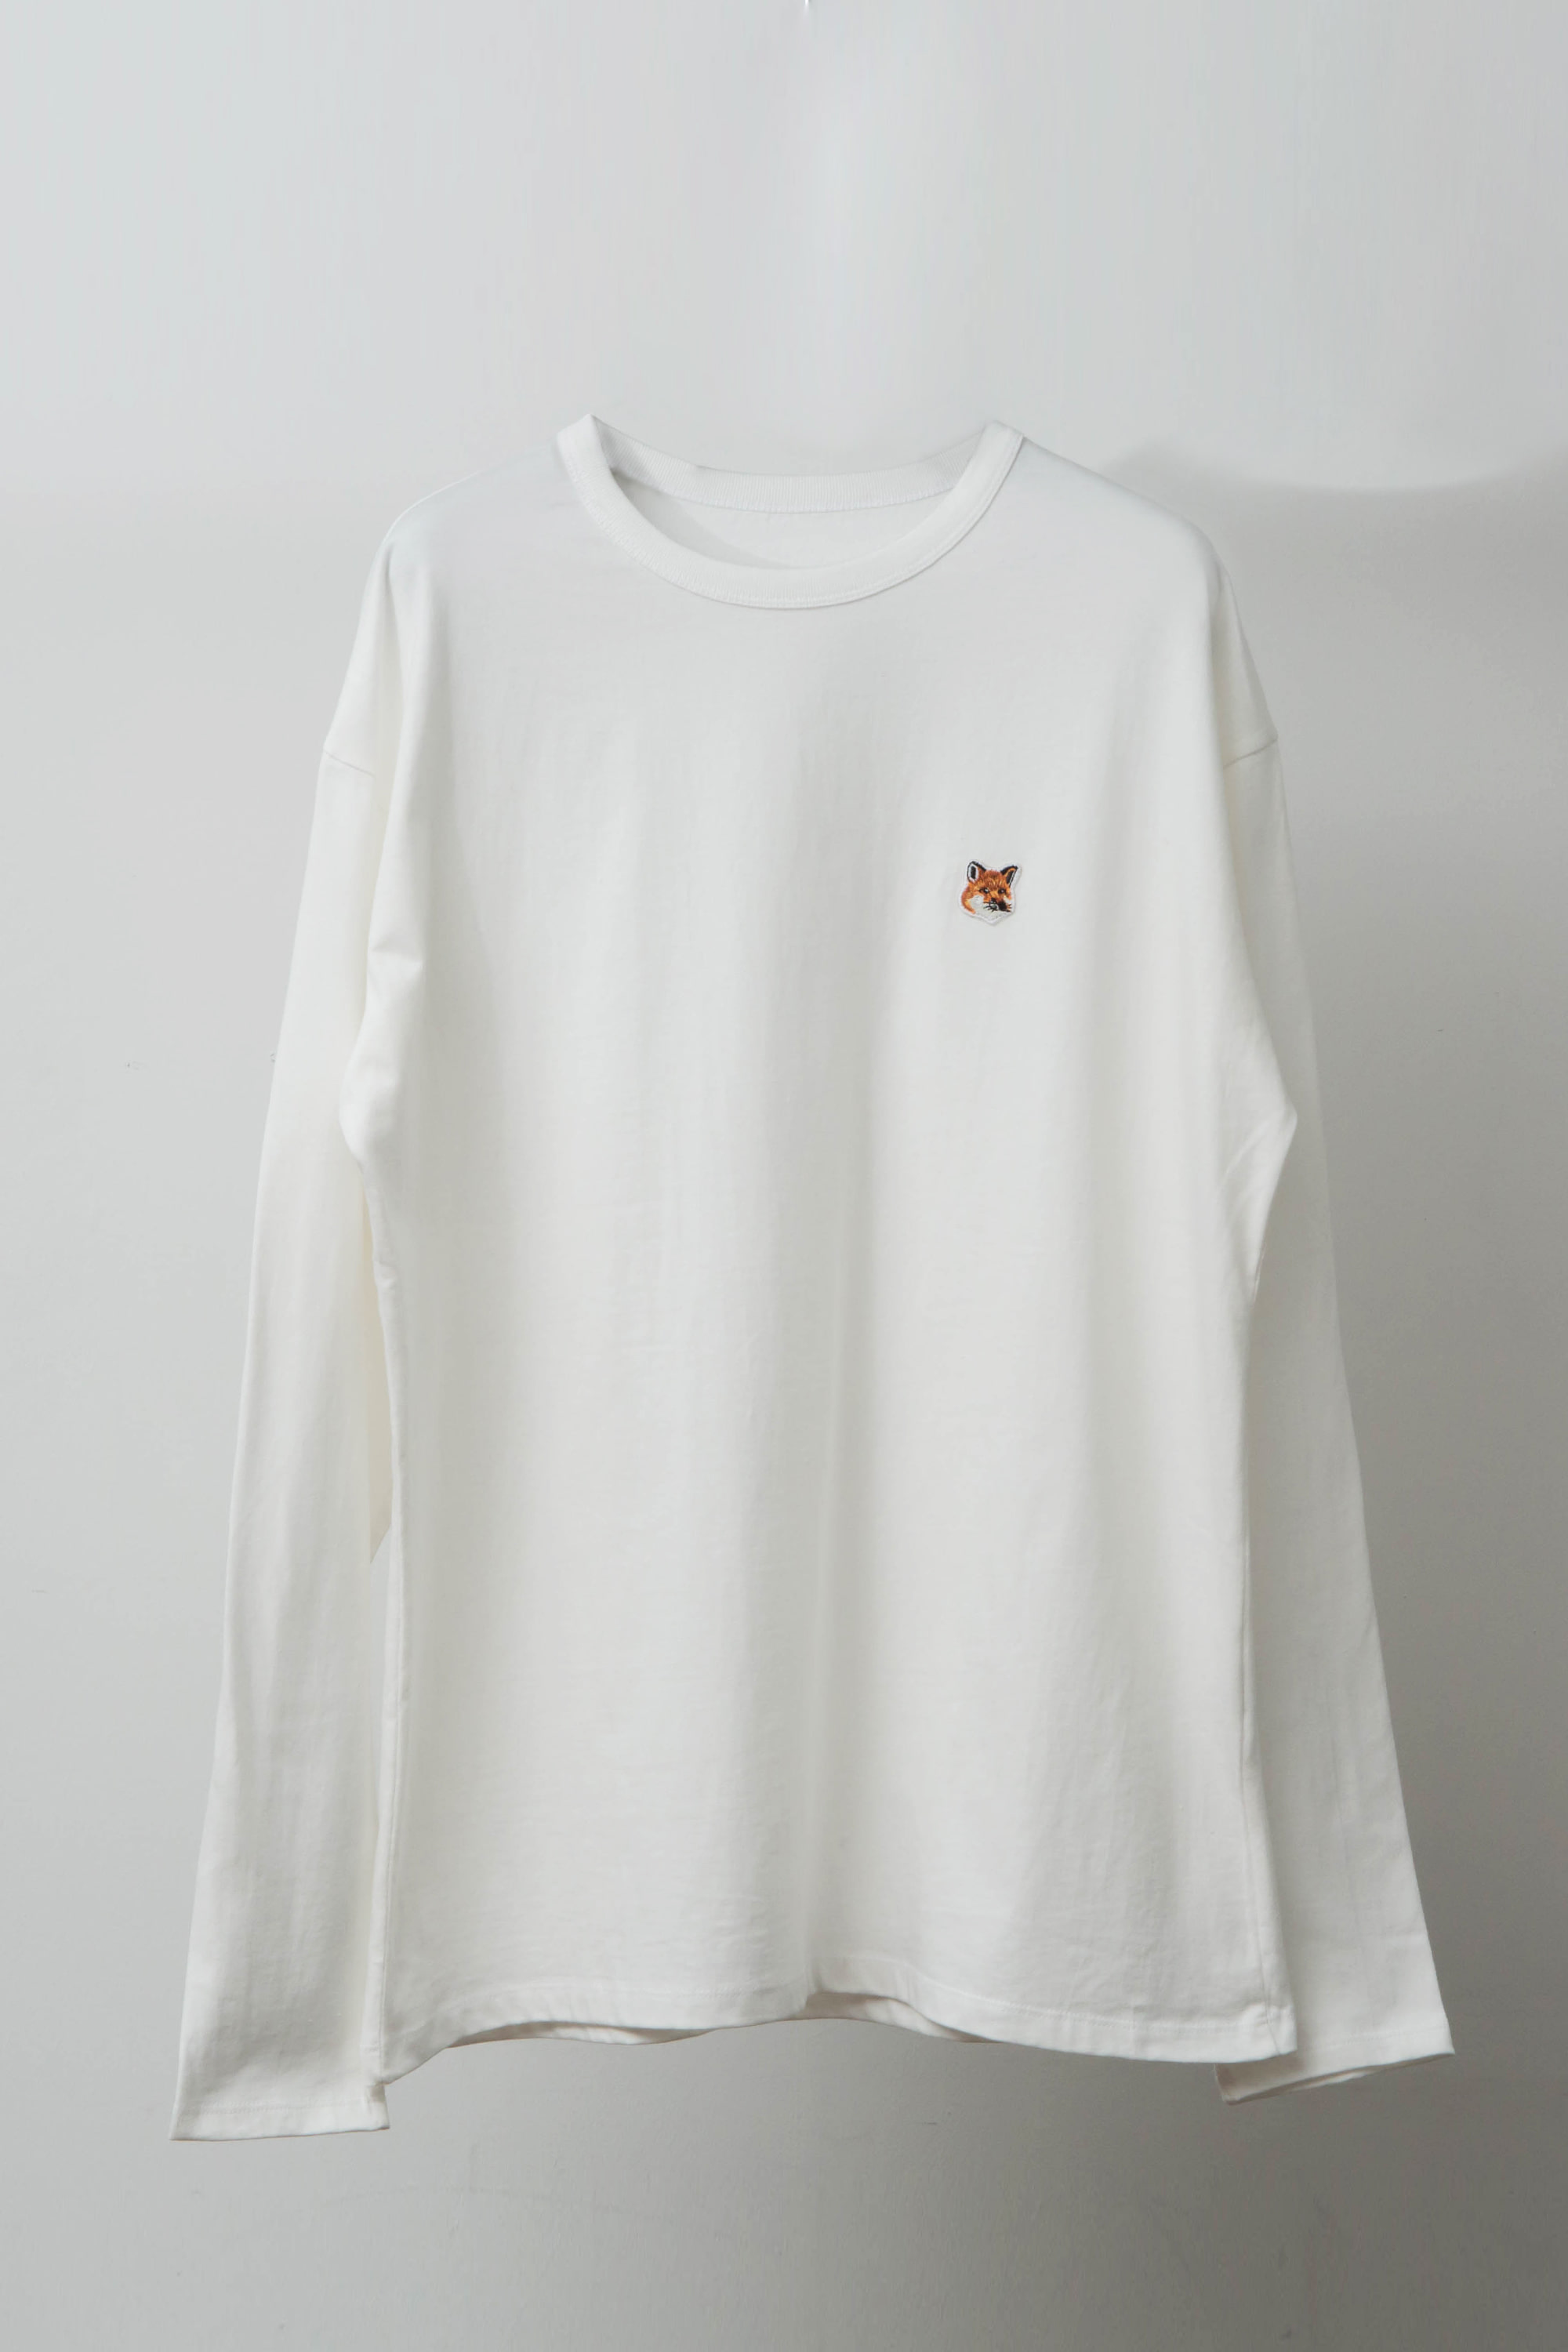 Unisex Long Sleeve Tee-Shirt Fox Head Patch  (White &amp; Black)   (GOLD FOX 자수 100% 작업)  프리미엄 코튼원단  당일발송